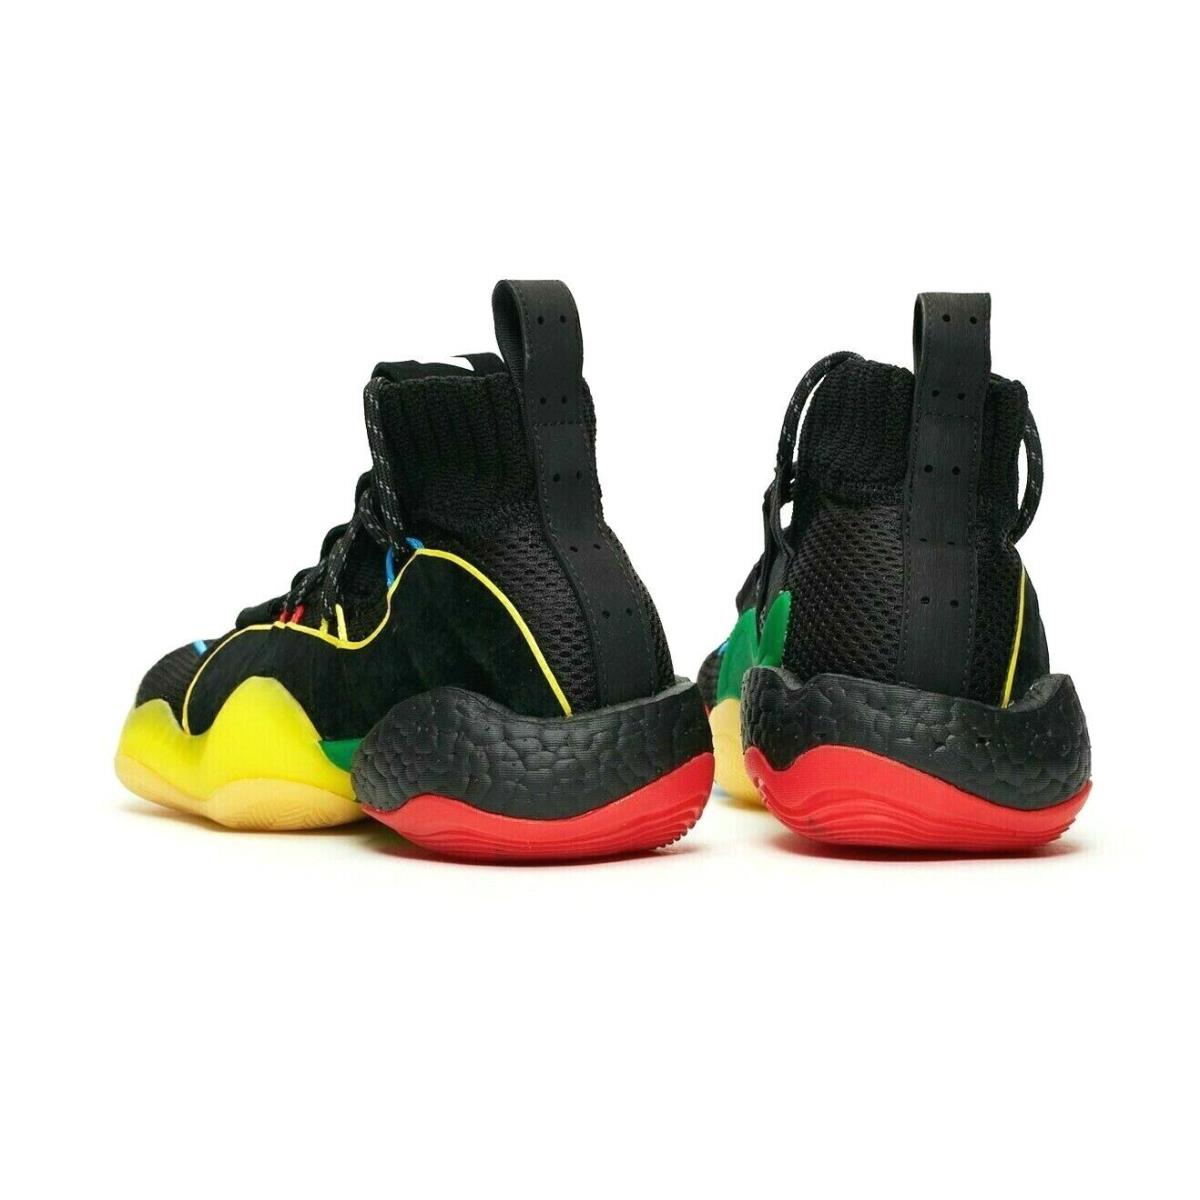 Adidas shoes Crazy BYW - Multicolor 2